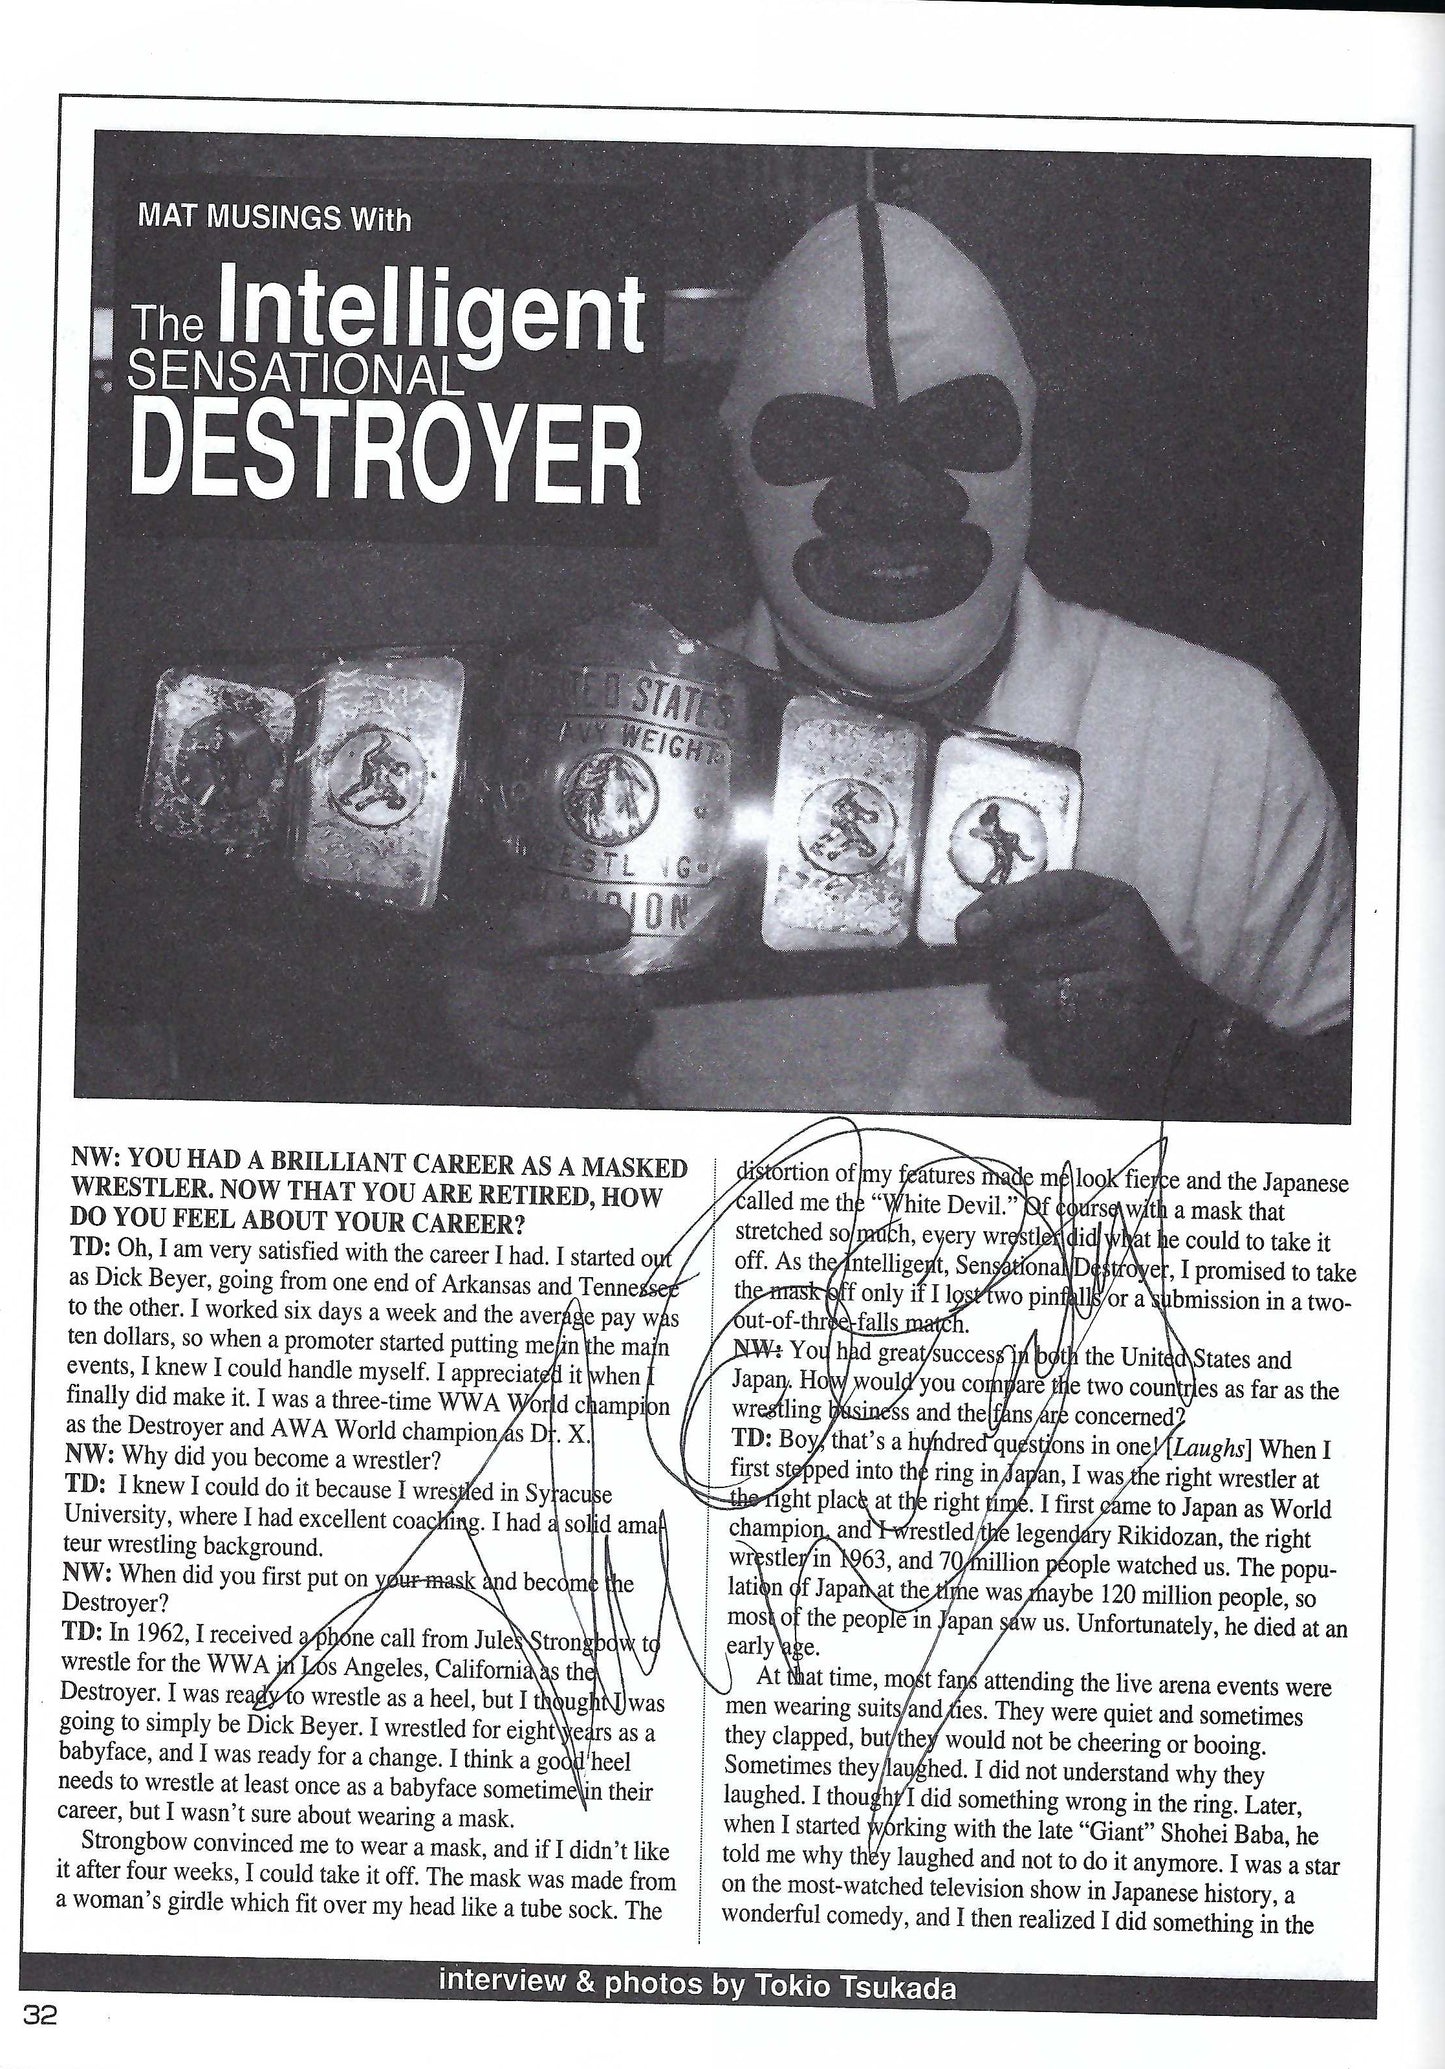 BD25  Kurt Angle Sunny  Destroyer Autographed Vintage Wrestling Magazine / Program w/COA